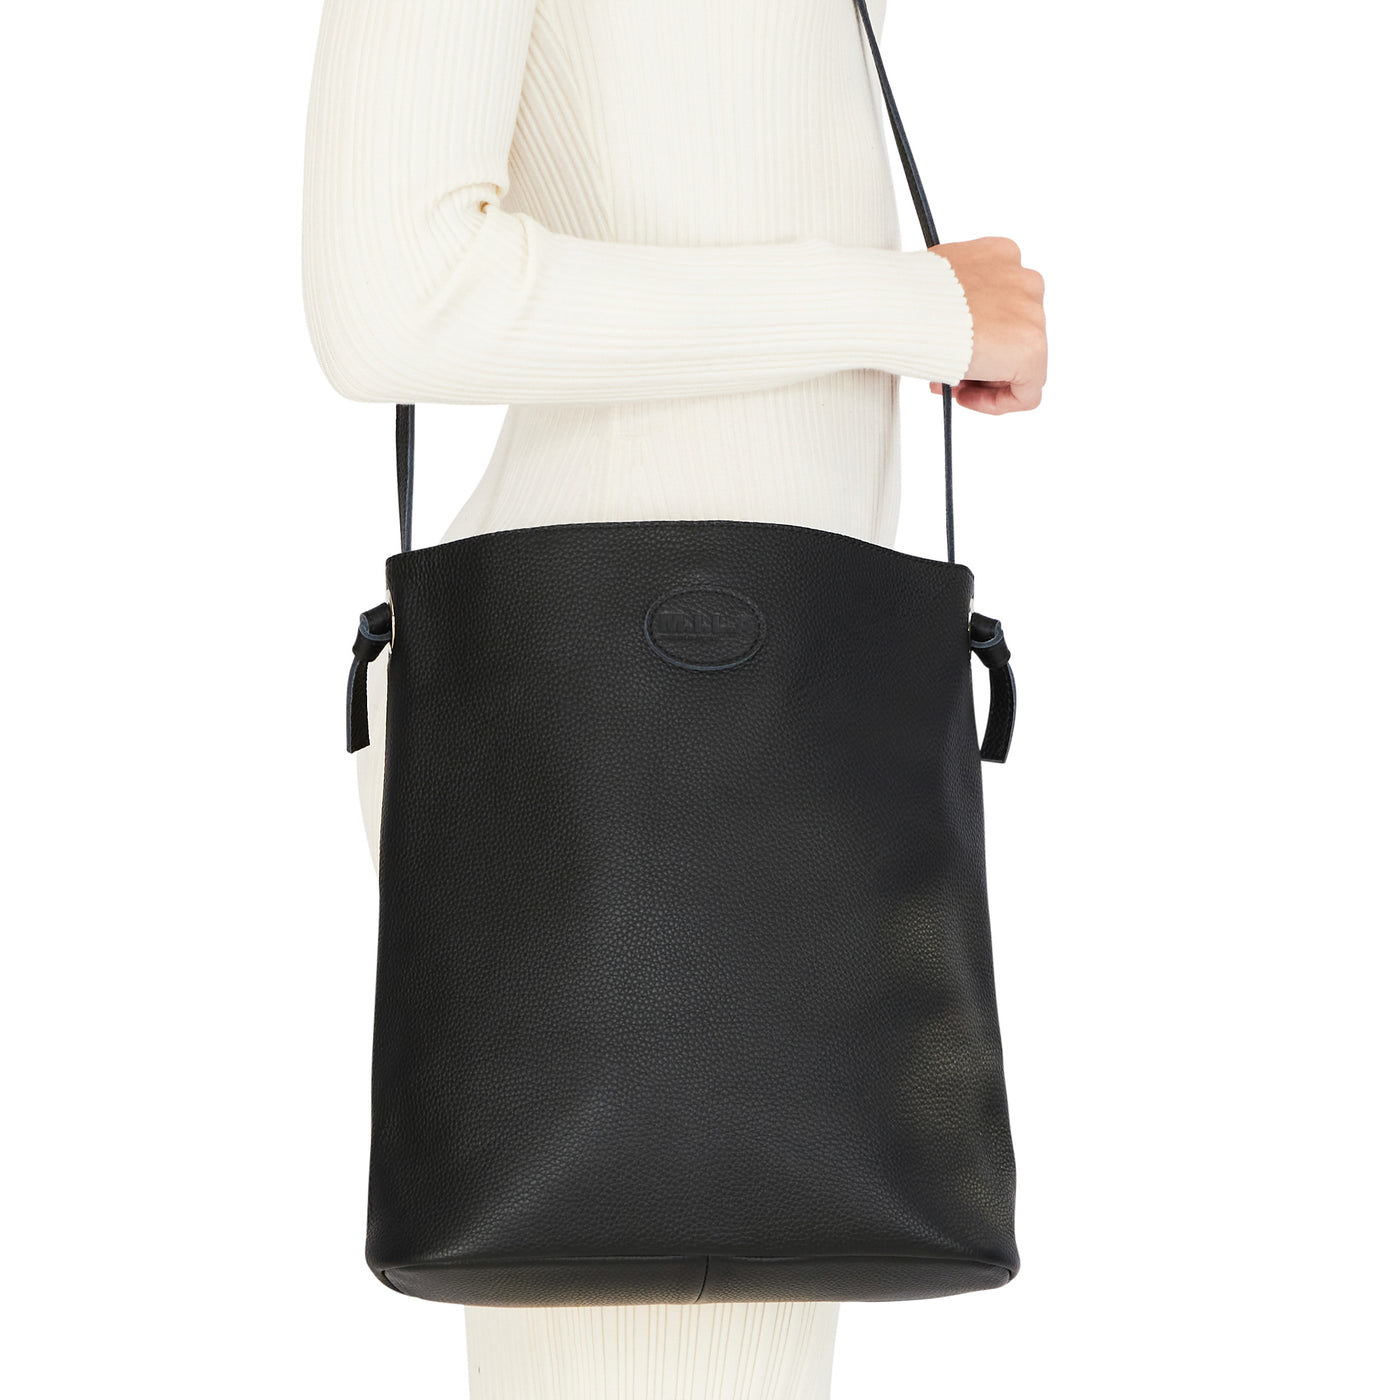 Black Leather handbag,Leather satchel,Mini Leather handbag,Cross Bag Gift,Women Leather Handbag,Crossbody City Bag,Shoulder Bag Woman